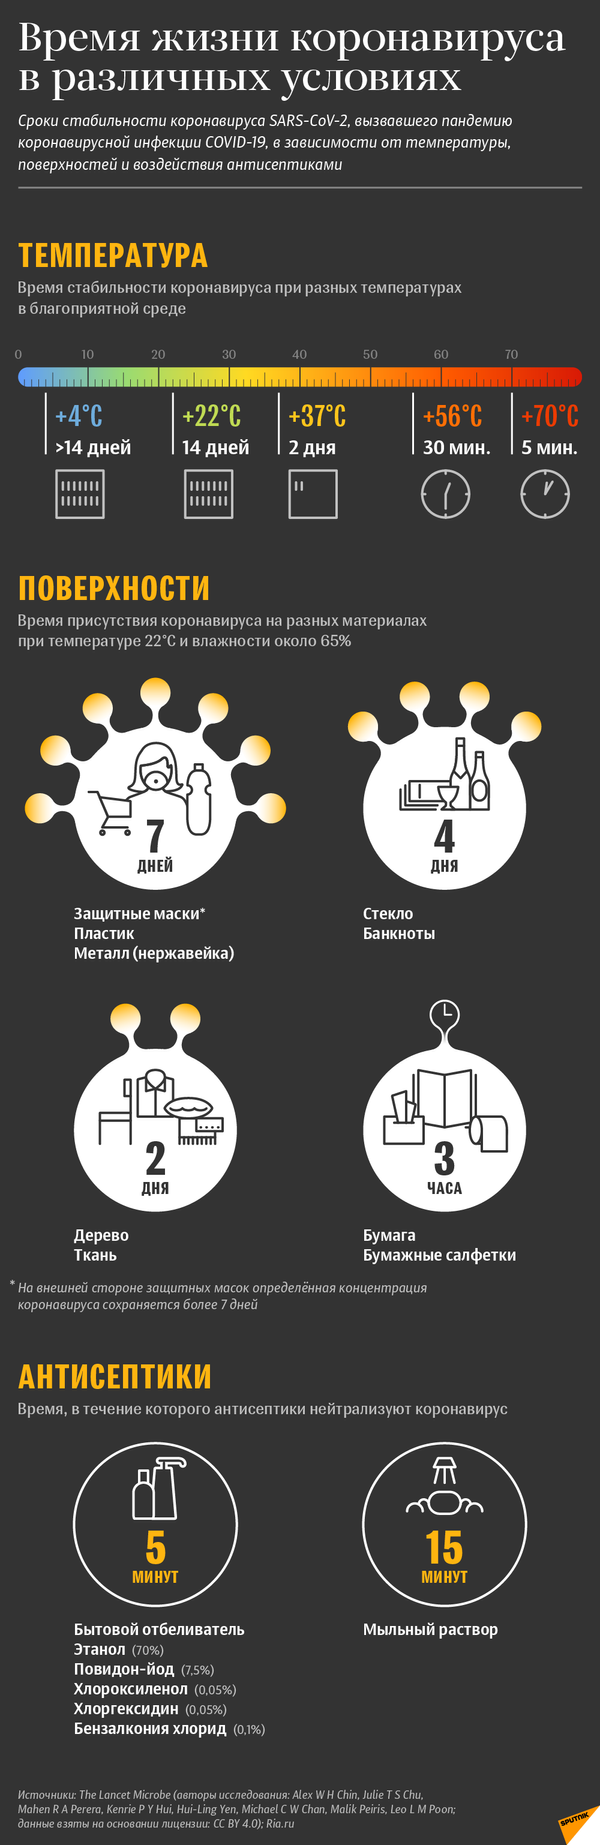 COVID-19: время жизни коронавируса в различных условиях | Инфографика sputnik.by - Sputnik Беларусь